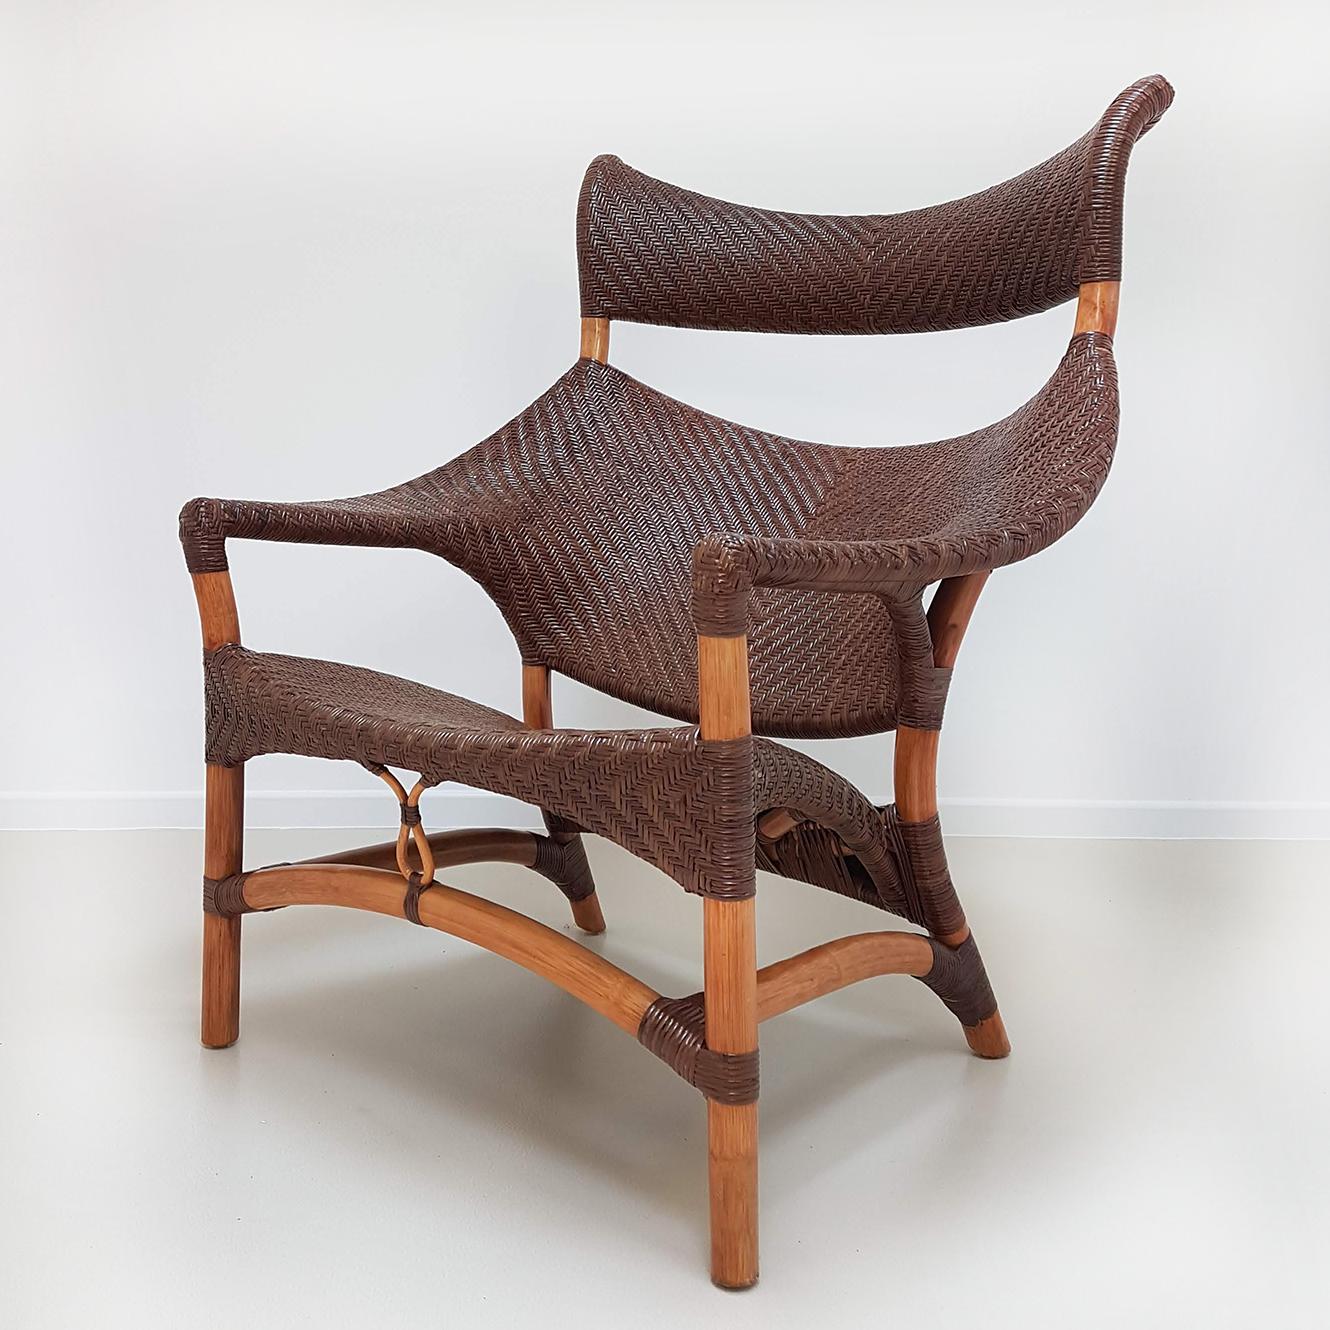 Japanese Rattan Chair and Foot Rest by Yuzru Yamakawa, Japan, 1980